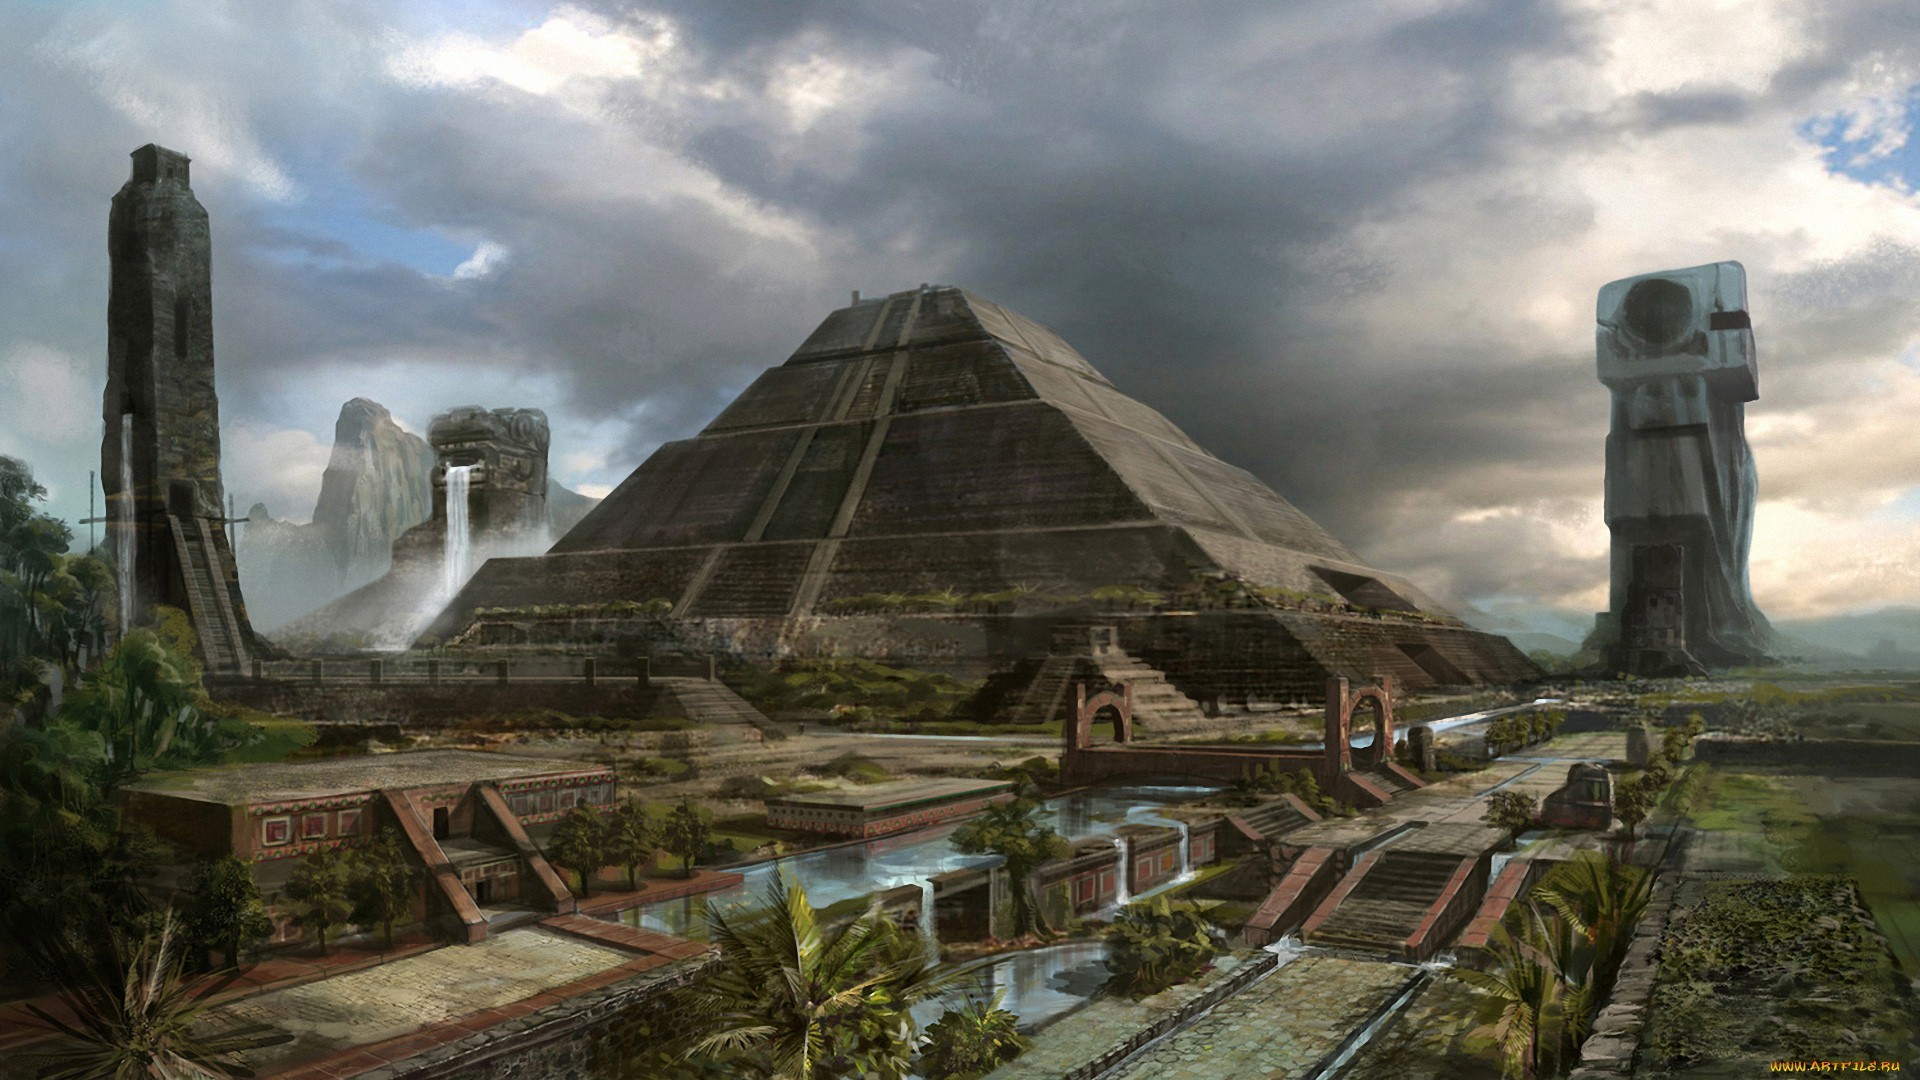 General 1920x1080 fantasy art pyramid digital art Maya (civilization) tower palm trees clouds waterfall DeviantArt artwork